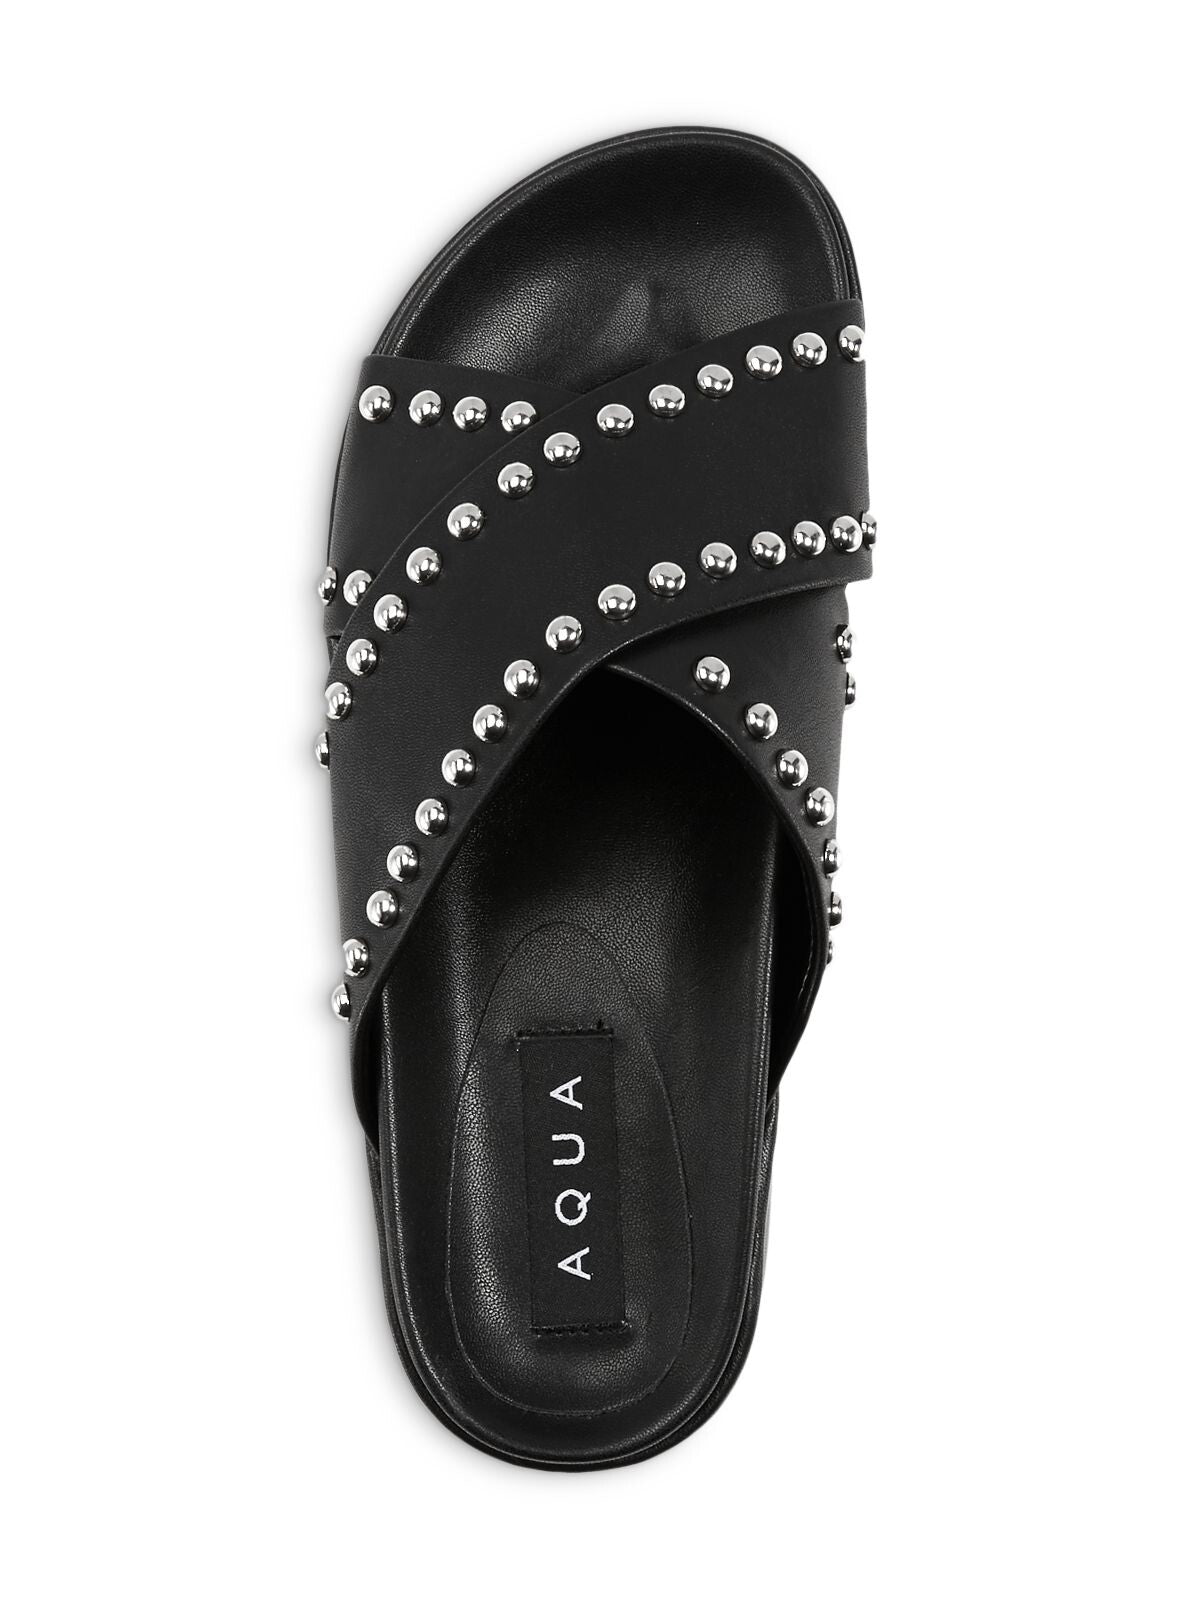 AQUA Womens Black Cushioned Studded Krisa Round Toe Platform Slip On Slide Sandals Shoes 8.5 M